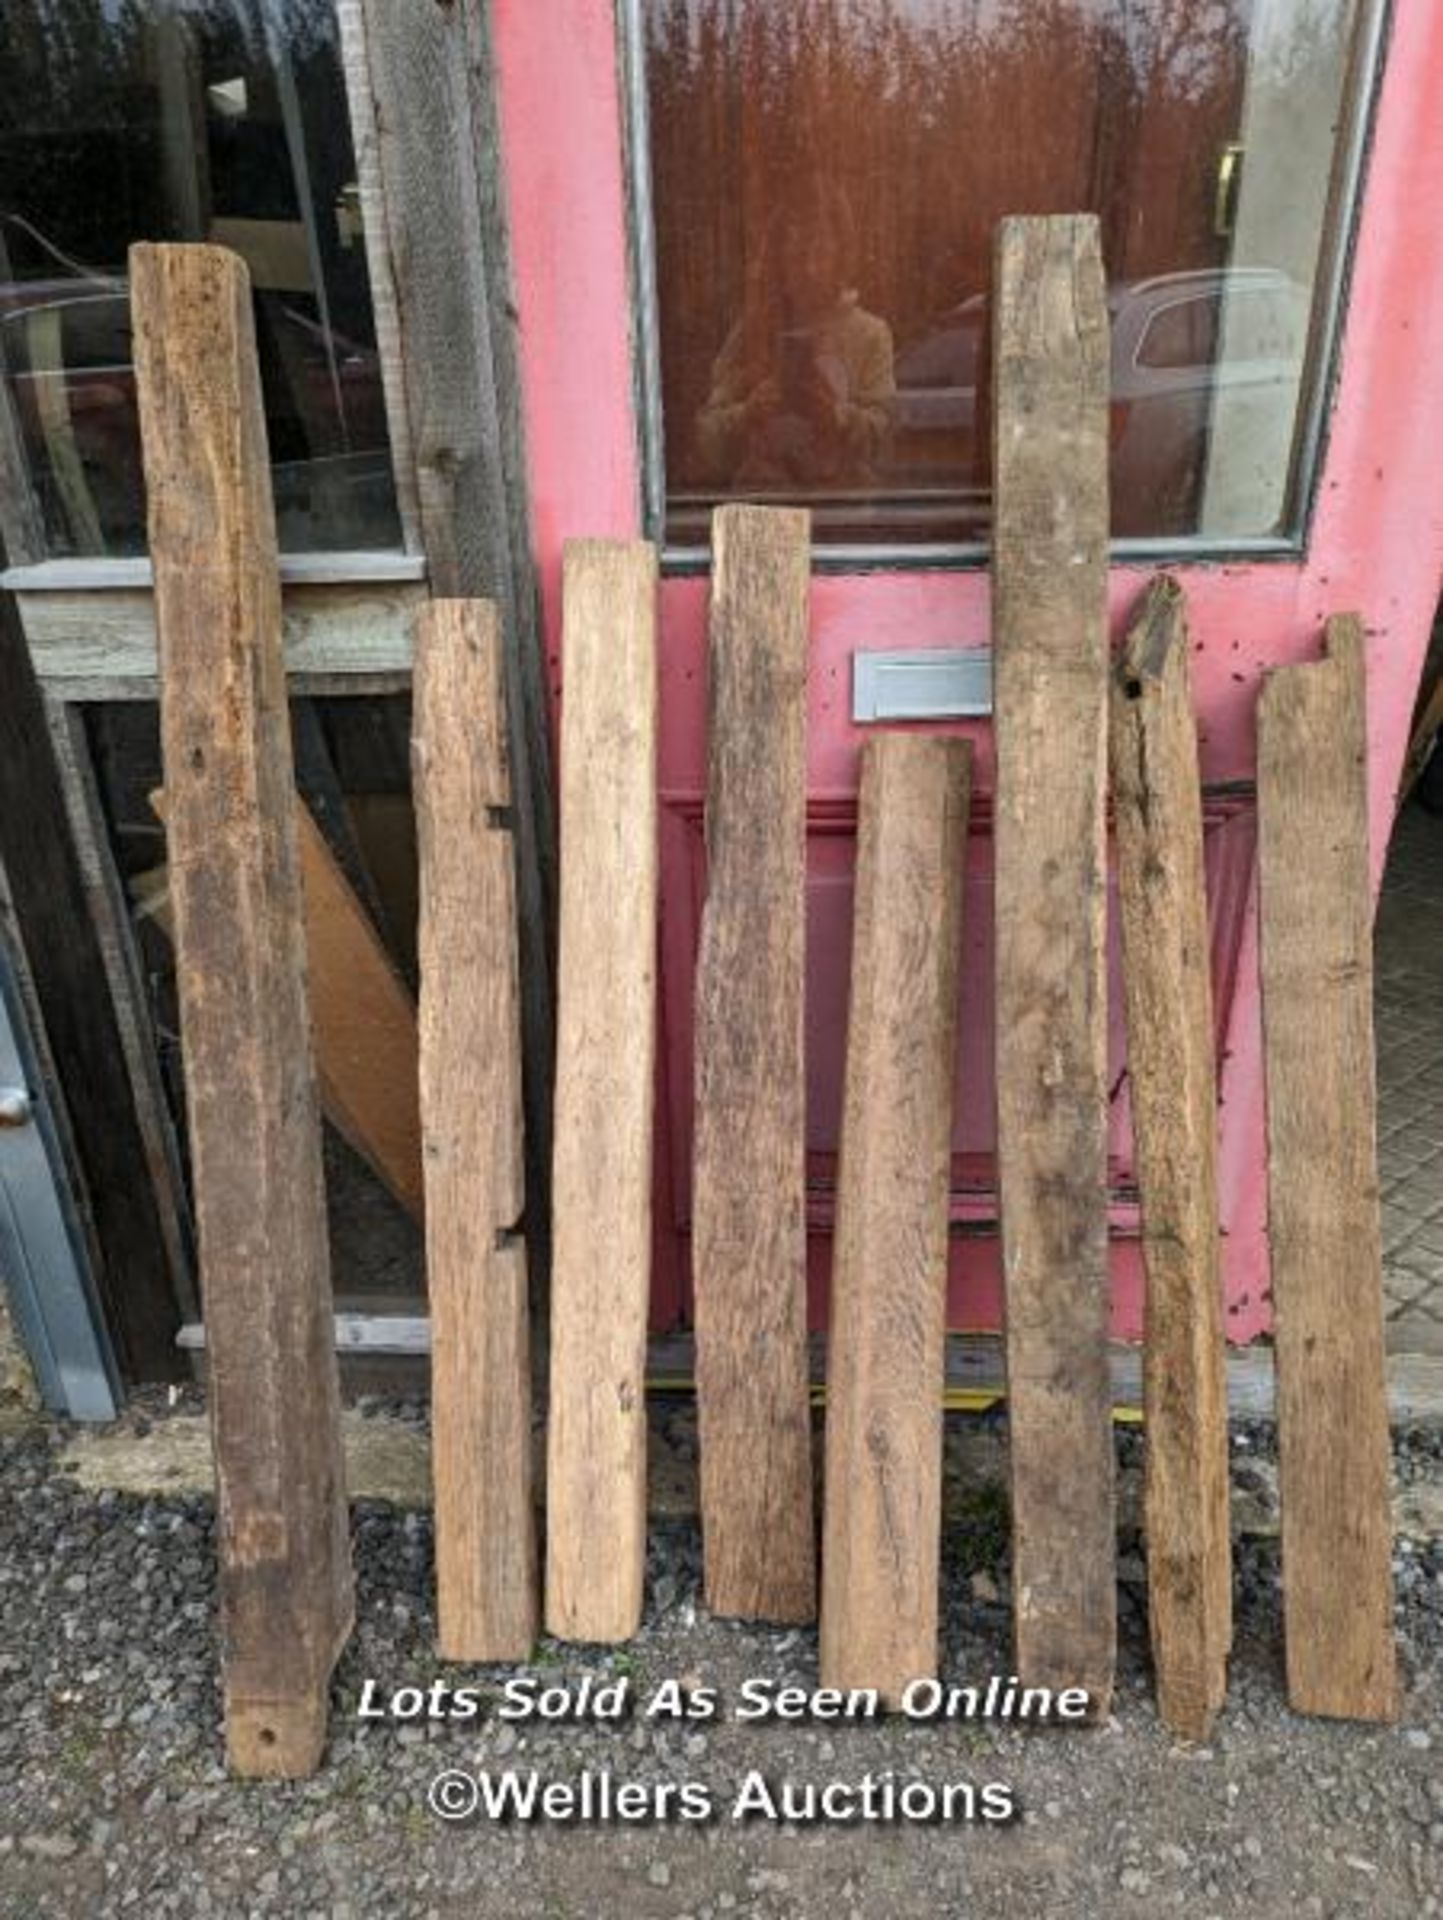 8 solid oak reclaimed beams for decorative use or over a woodburner/stove. Longest 149cm. Shortest